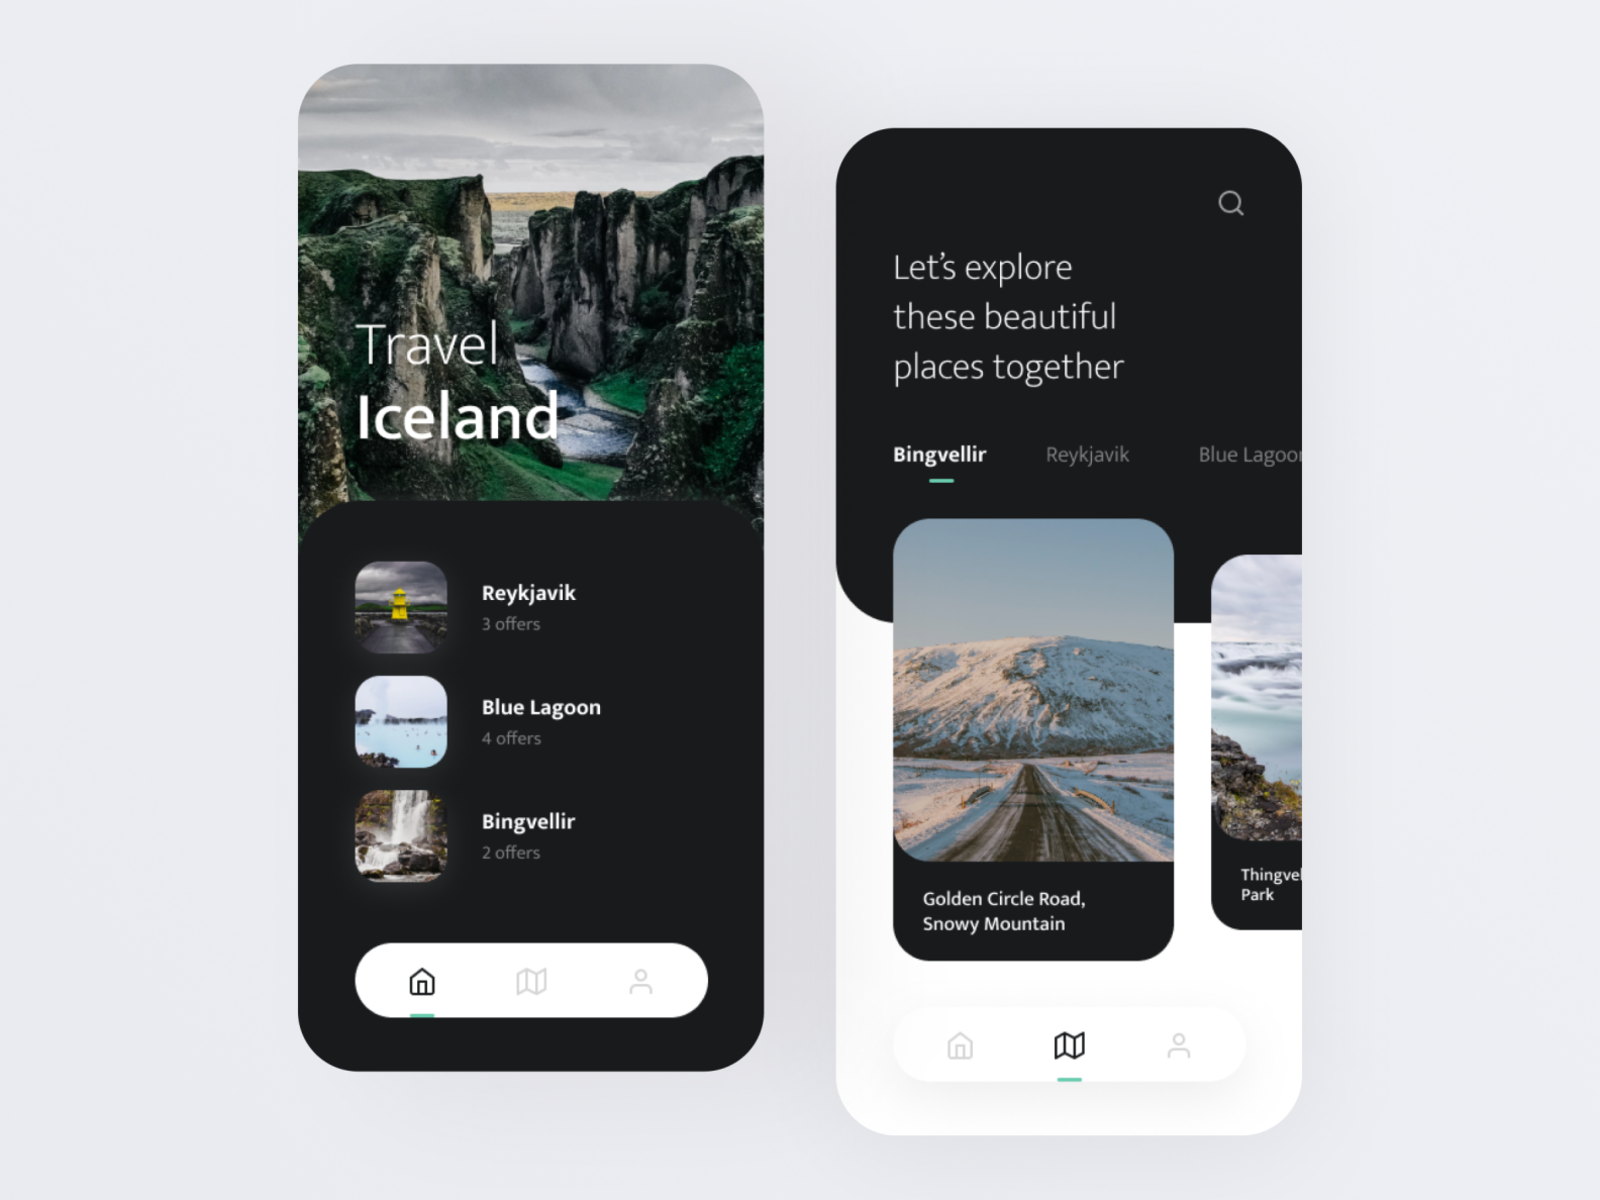 google translate iphone app icelandic